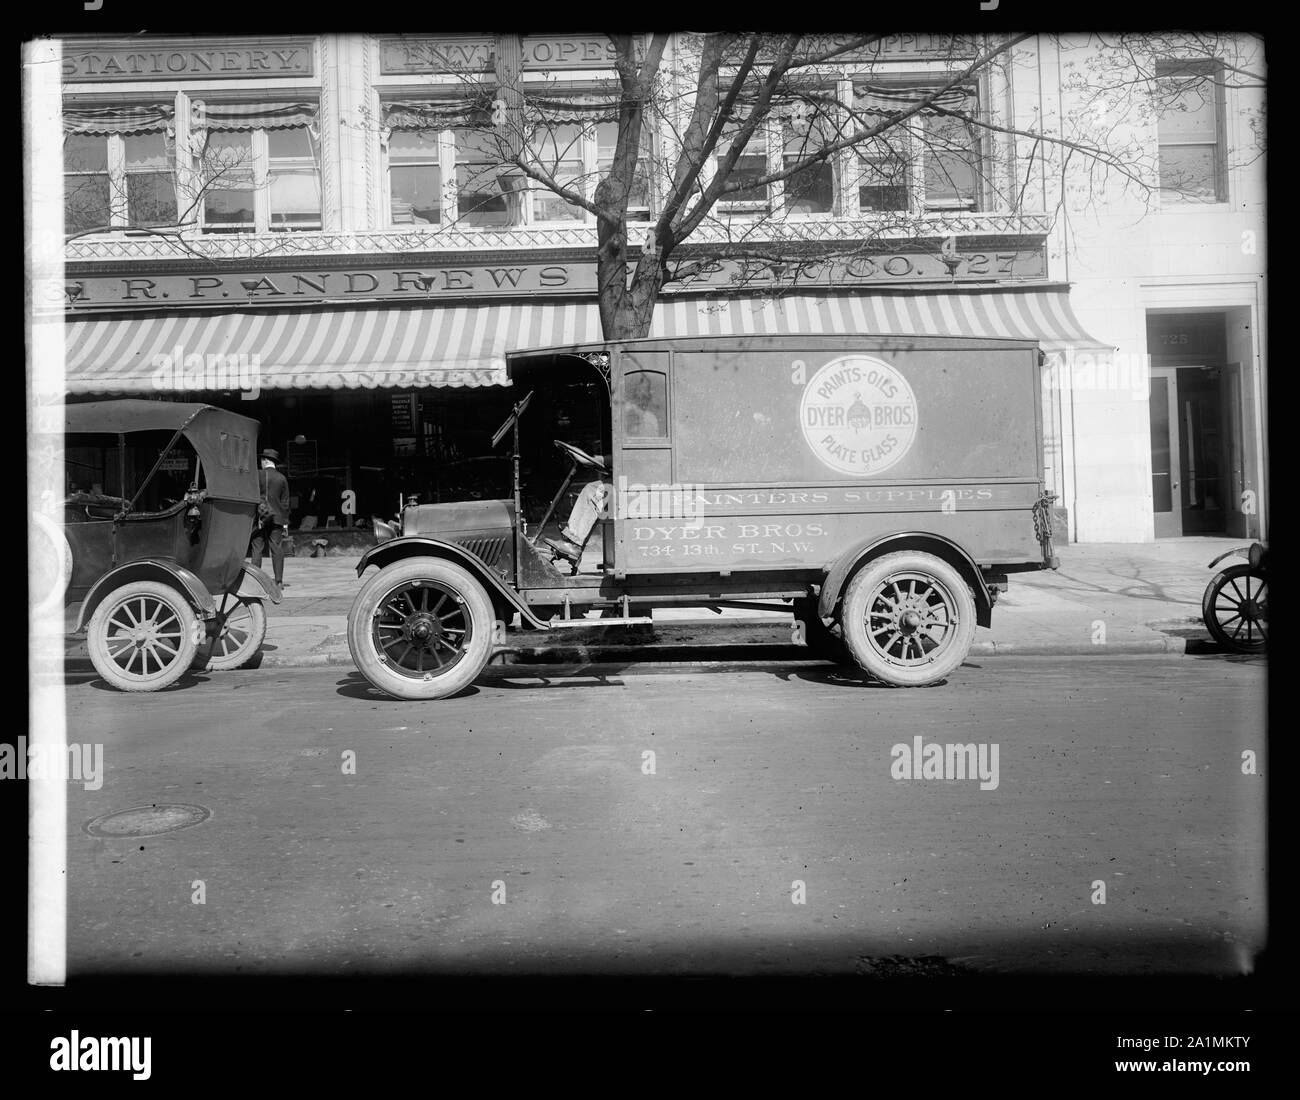 Oldsmobile truck, Dyer Bros., [Washington, D.C.] Stock Photo